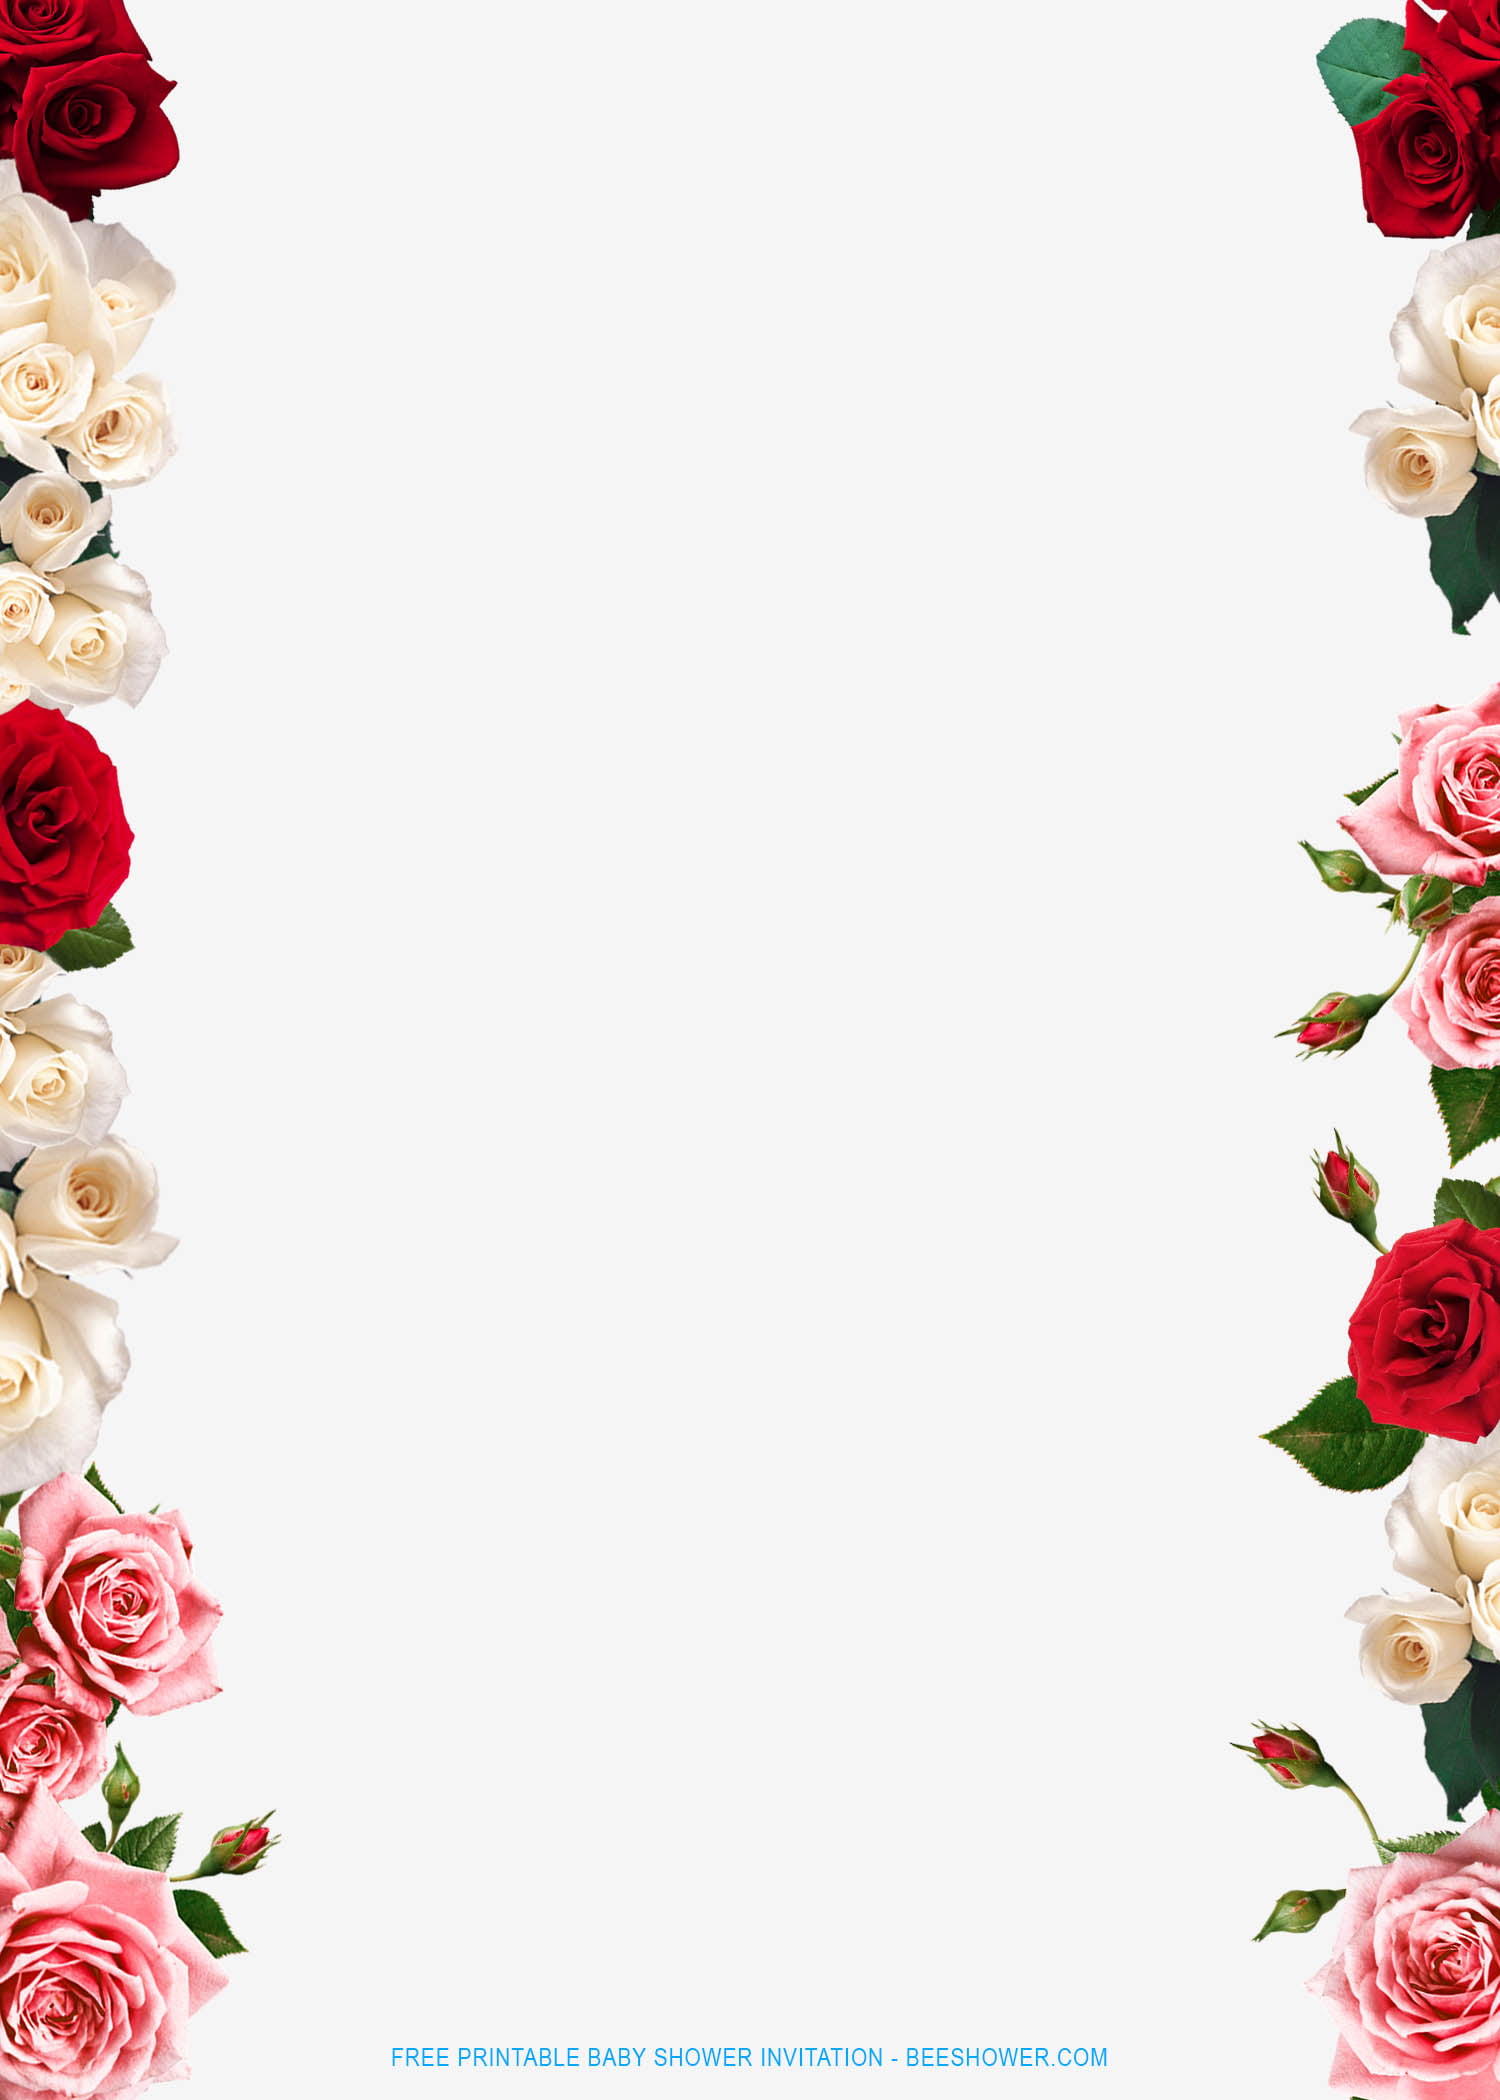 free-printable-floral-border-wedding-invitation-templates-free-printable-baby-shower